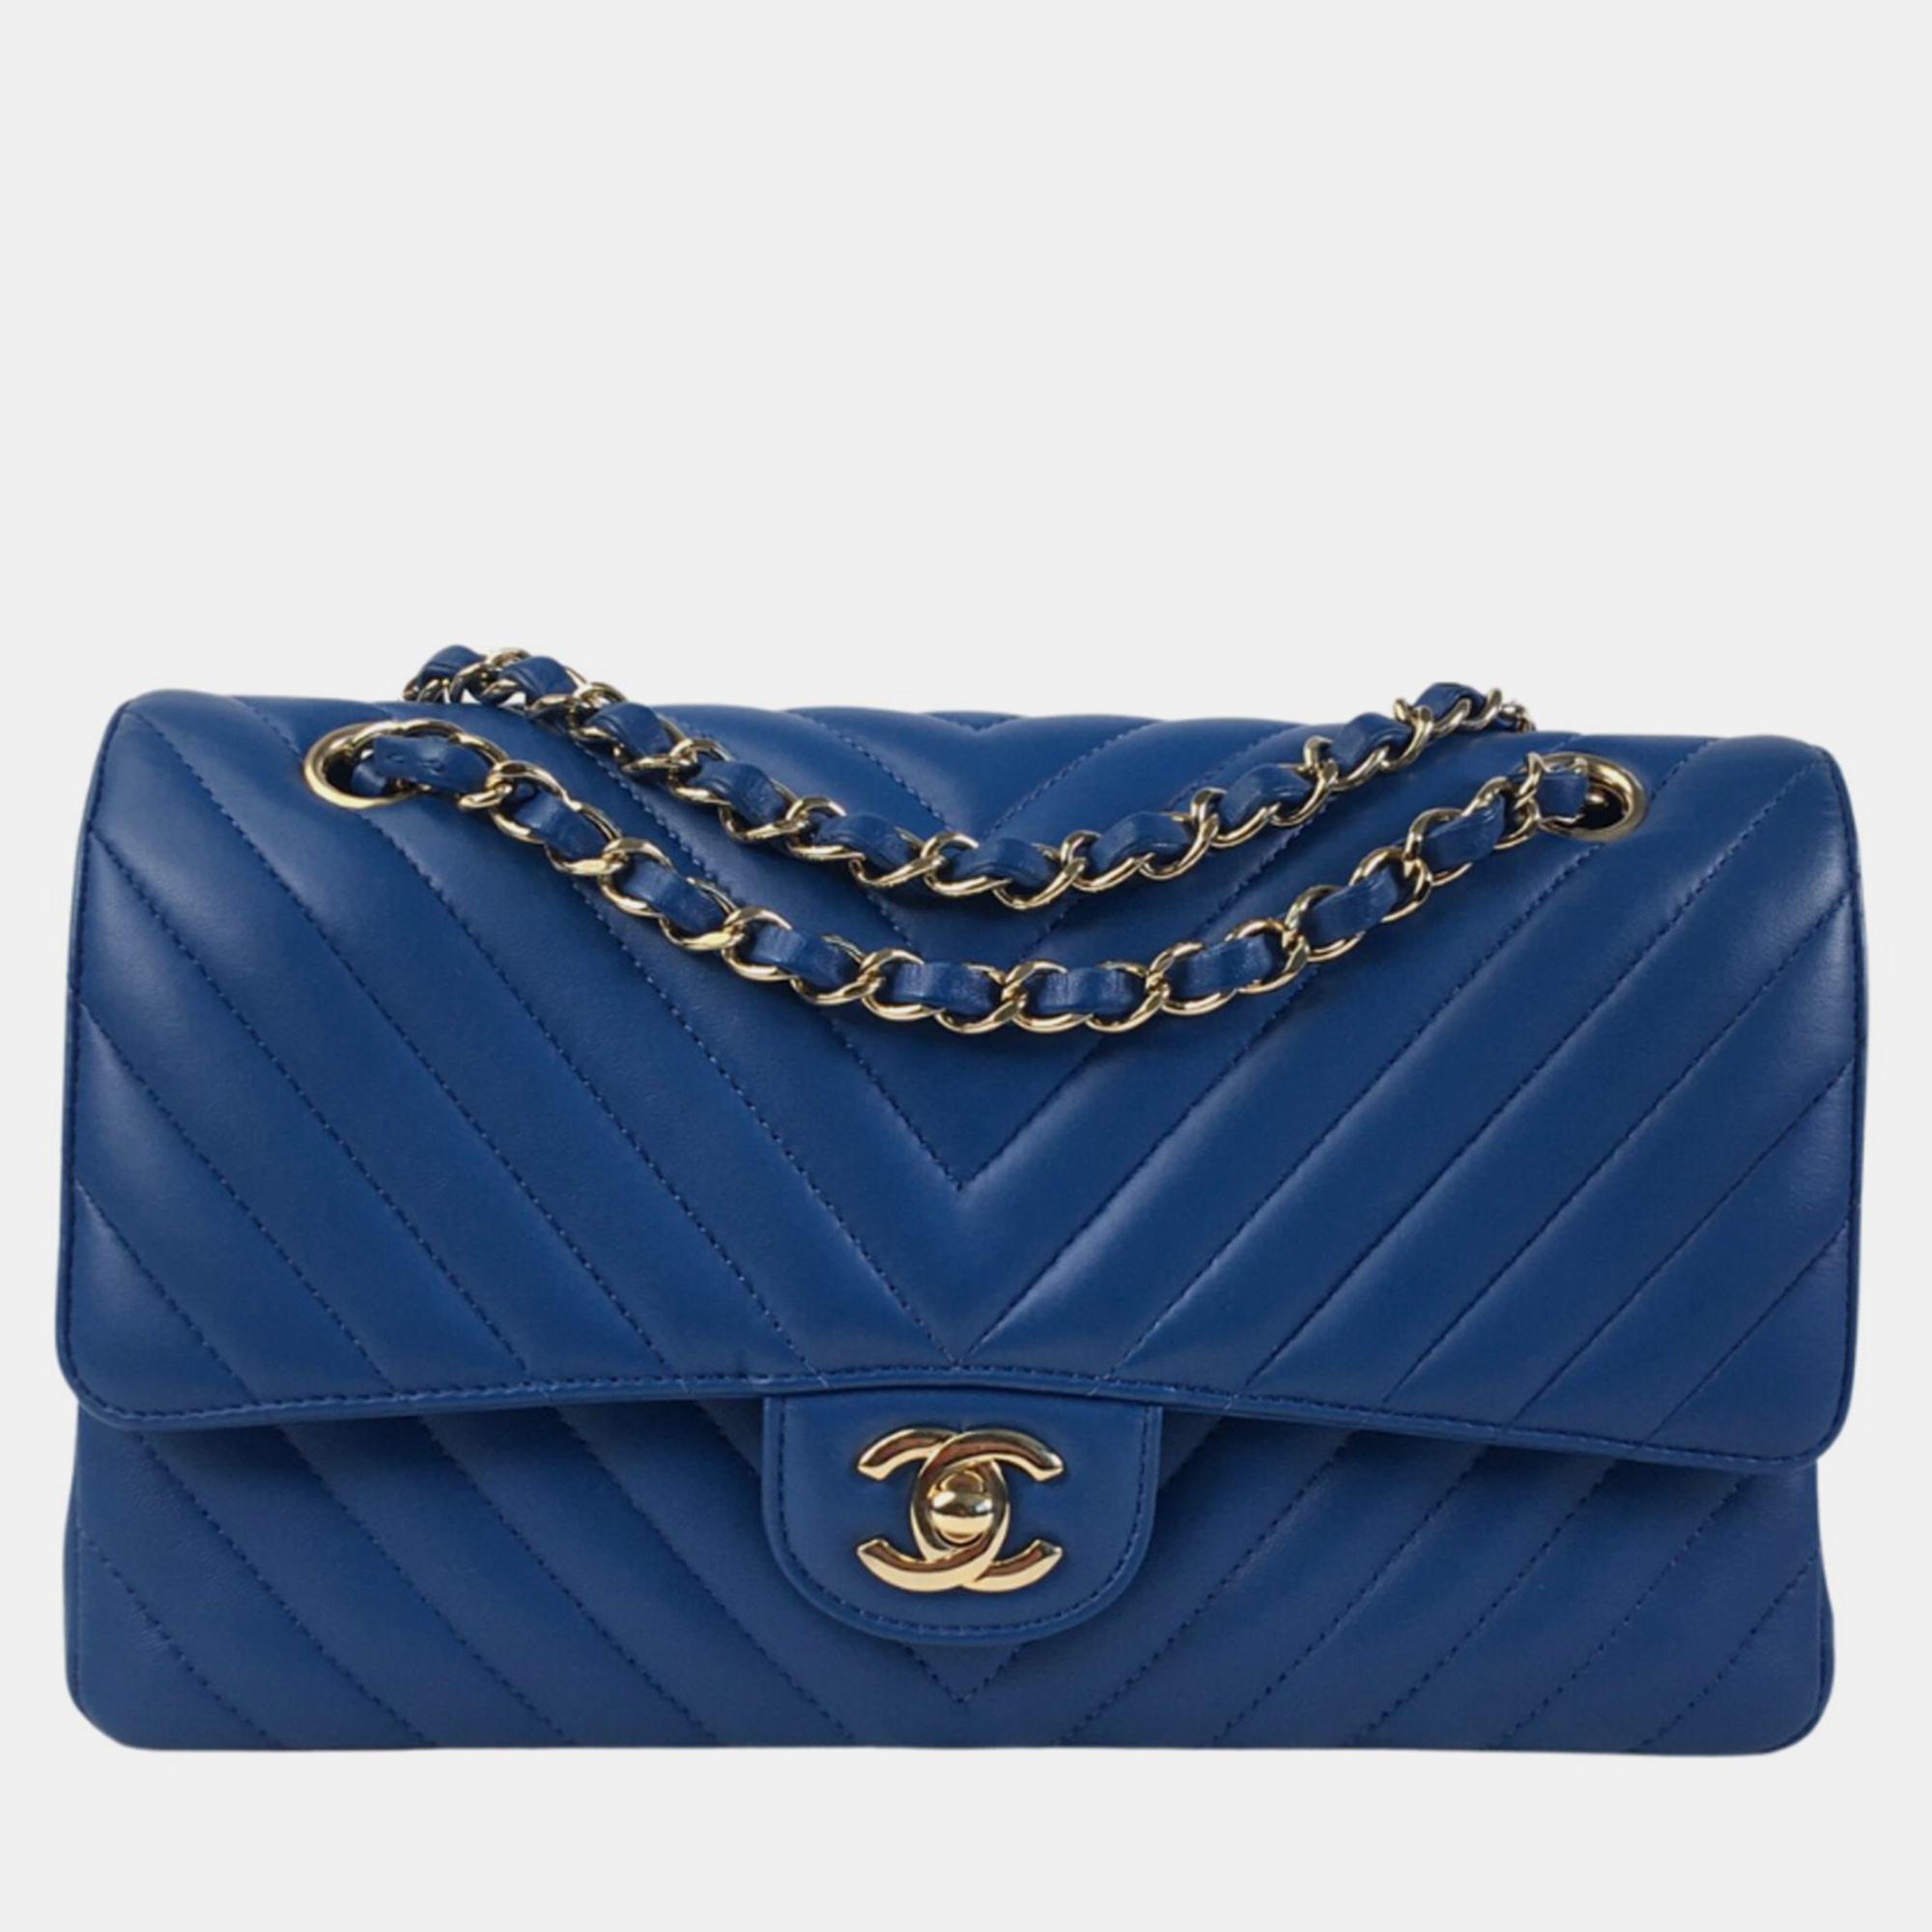 Chanel blue lambskin leather medium classic double flap shoulder bag